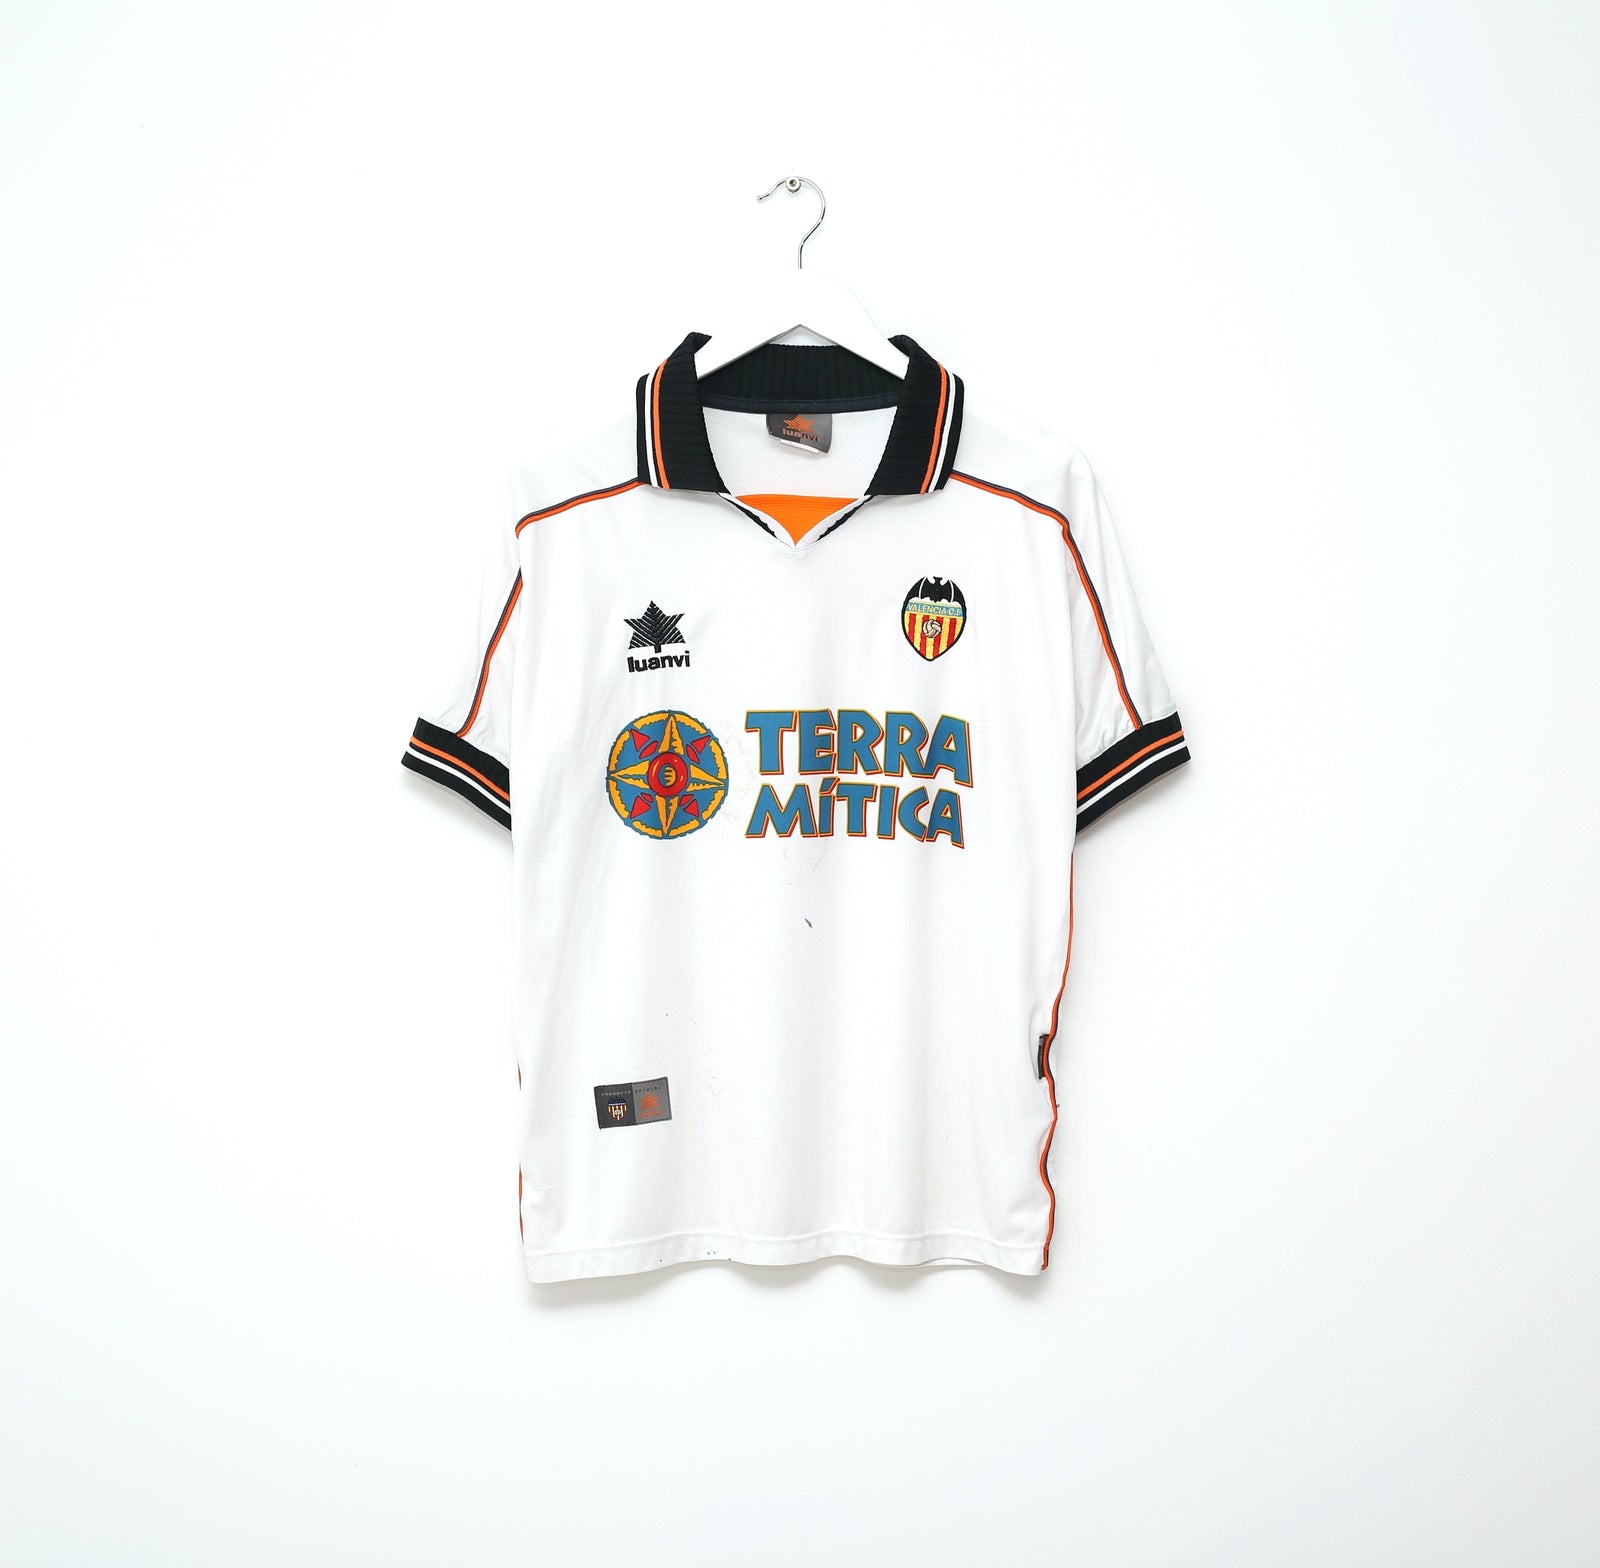 1999/00 VALENCIA Vintage Luanvi Home Football Shirt Jersey (S/M)